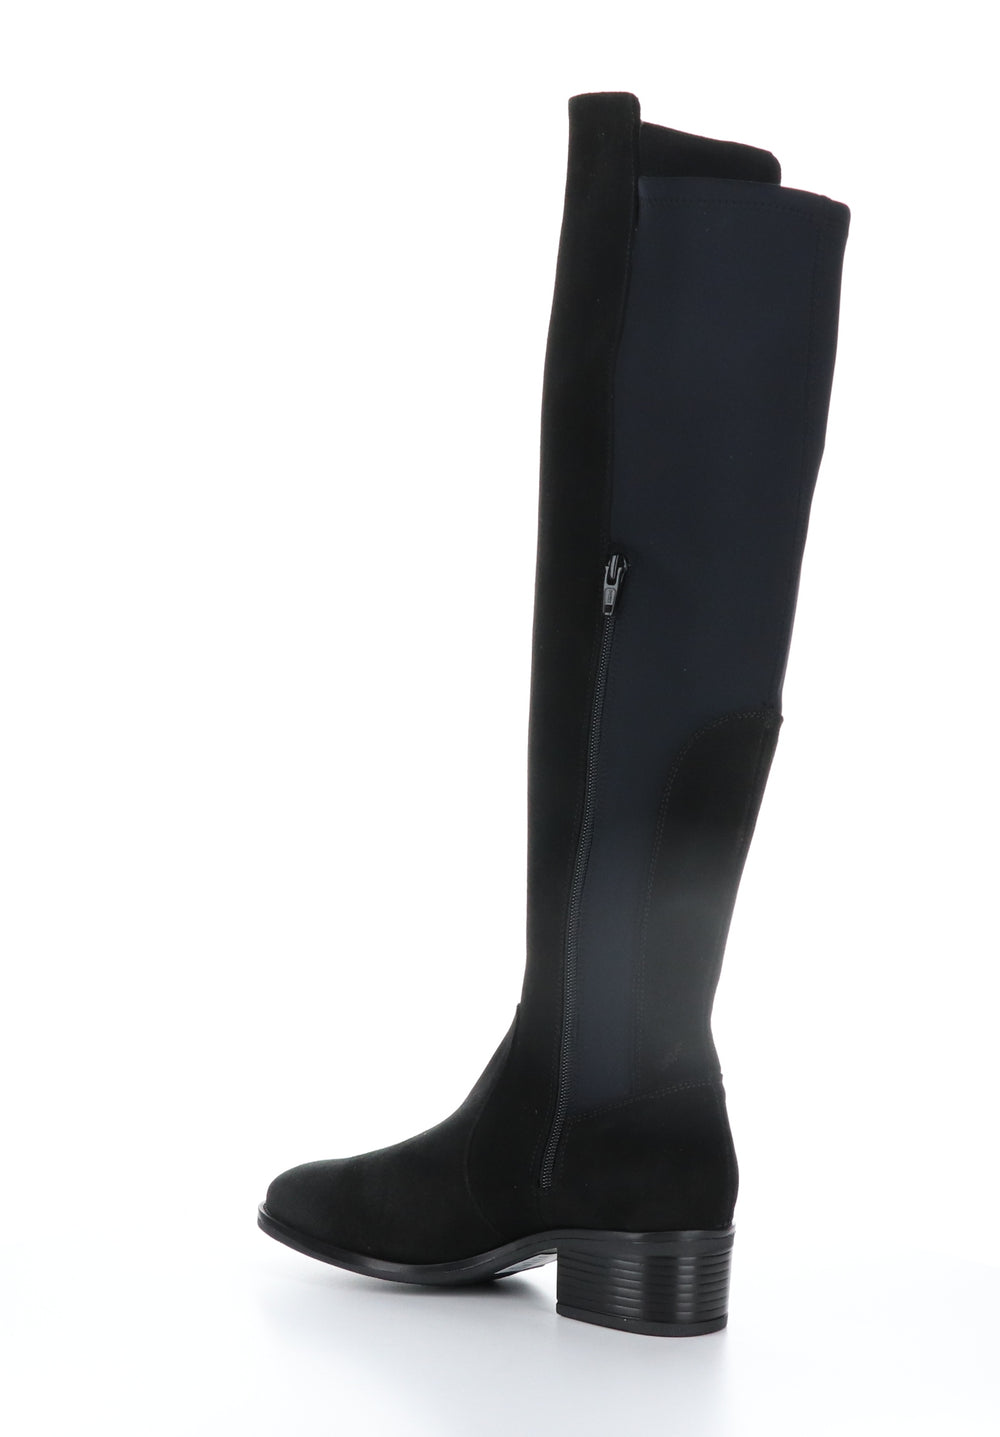 JEMMY Black Round Toe Boots|JEMMY Bottes à Bout Rond in Noir